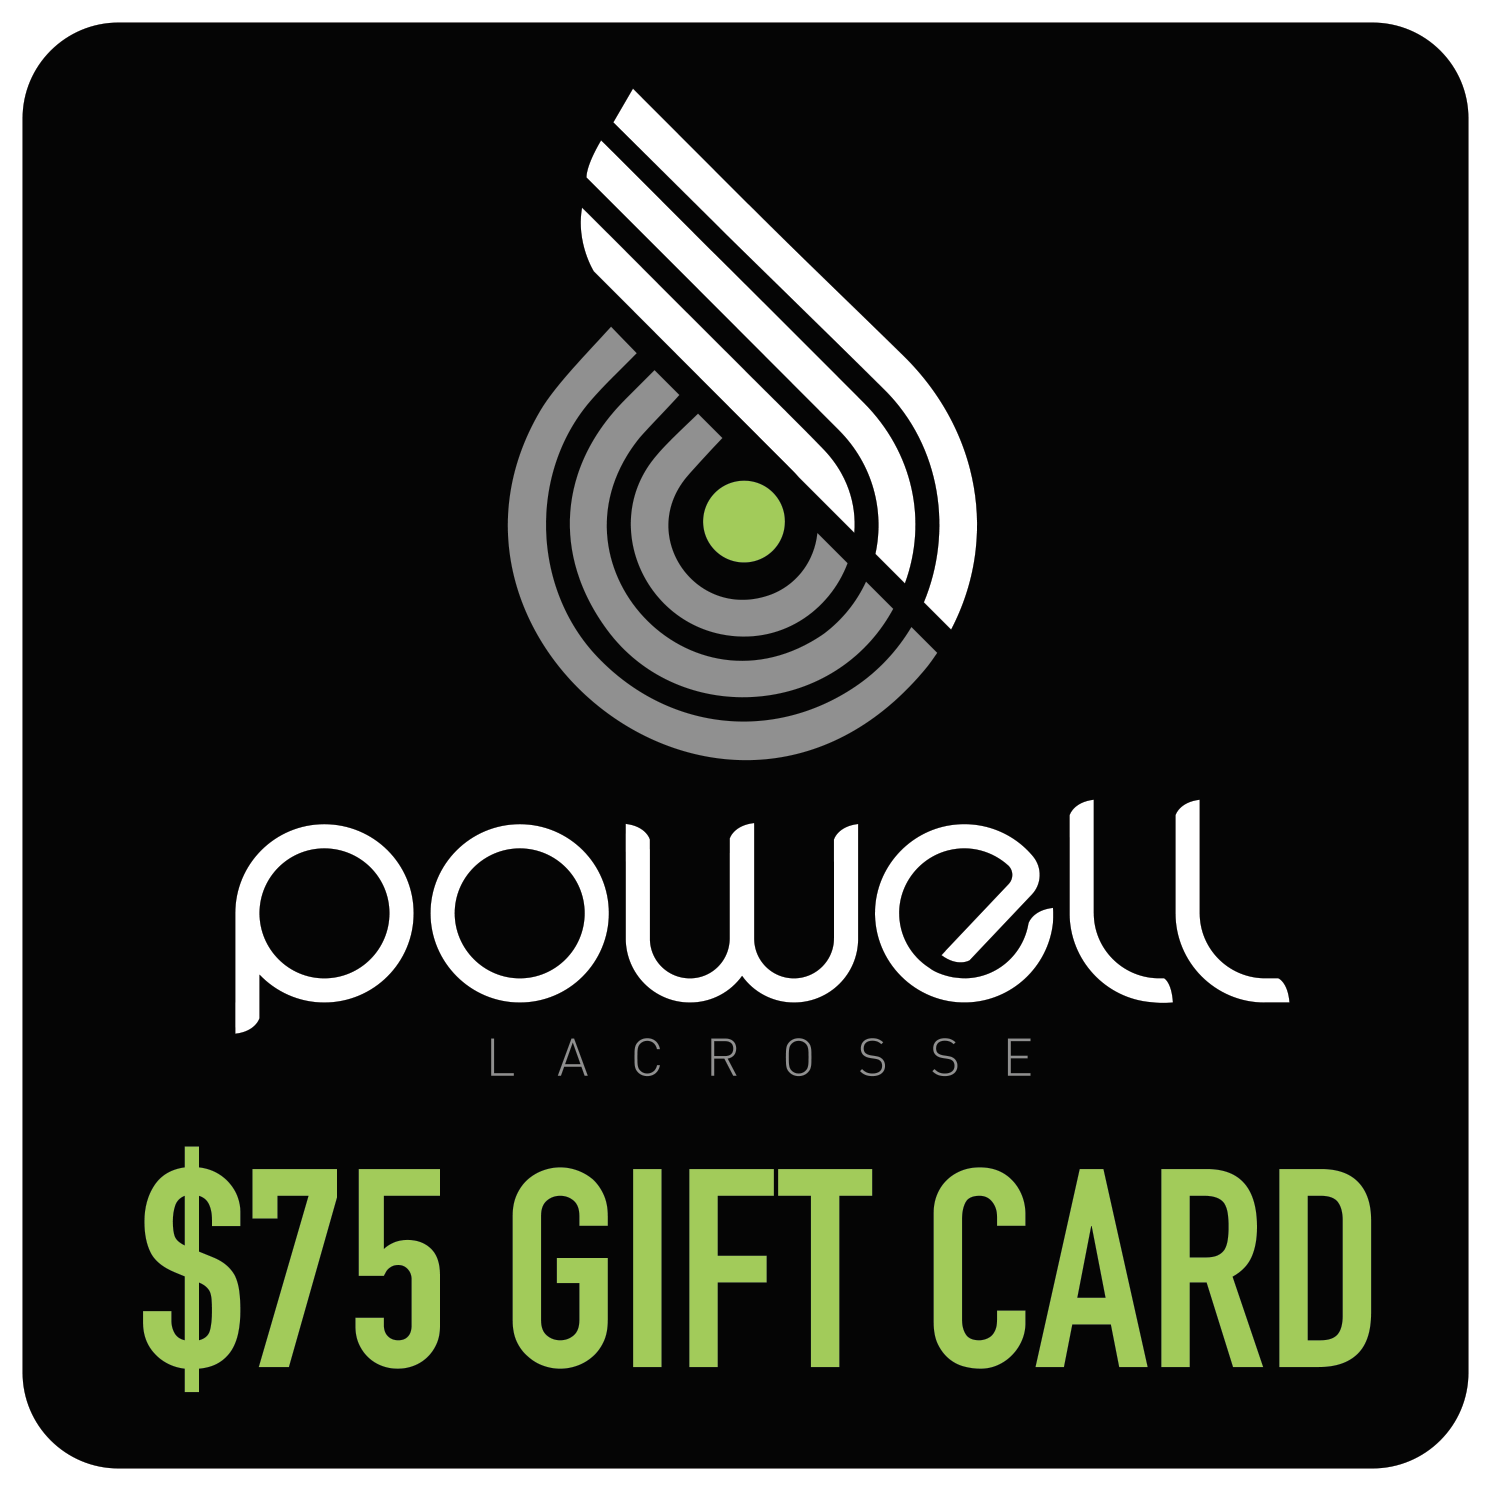 Powell Lacrosse Gift Card